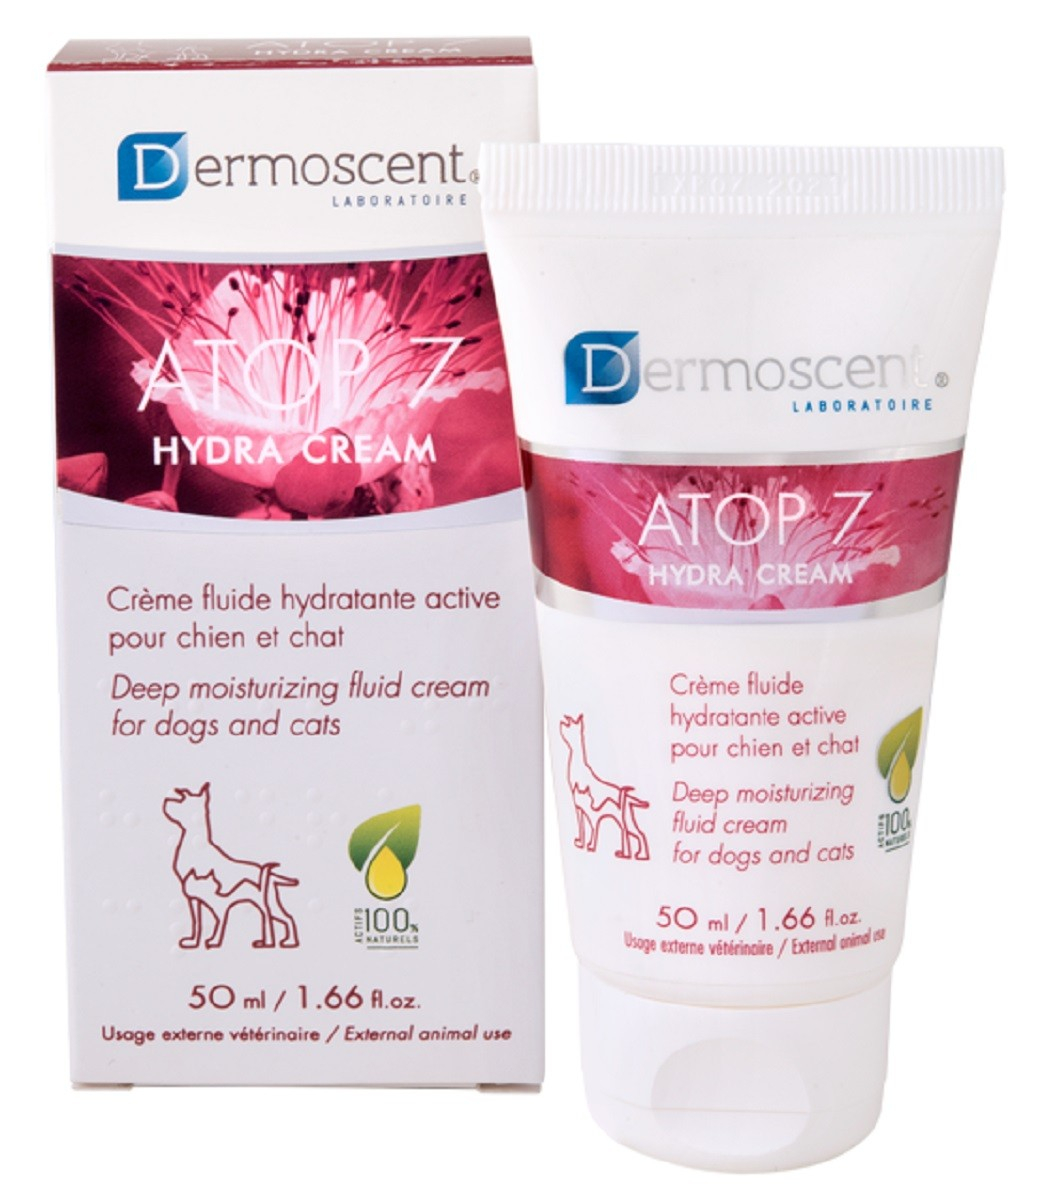 Dermoscent ATOP 7 Hydra Cream crème fluide hydratante active